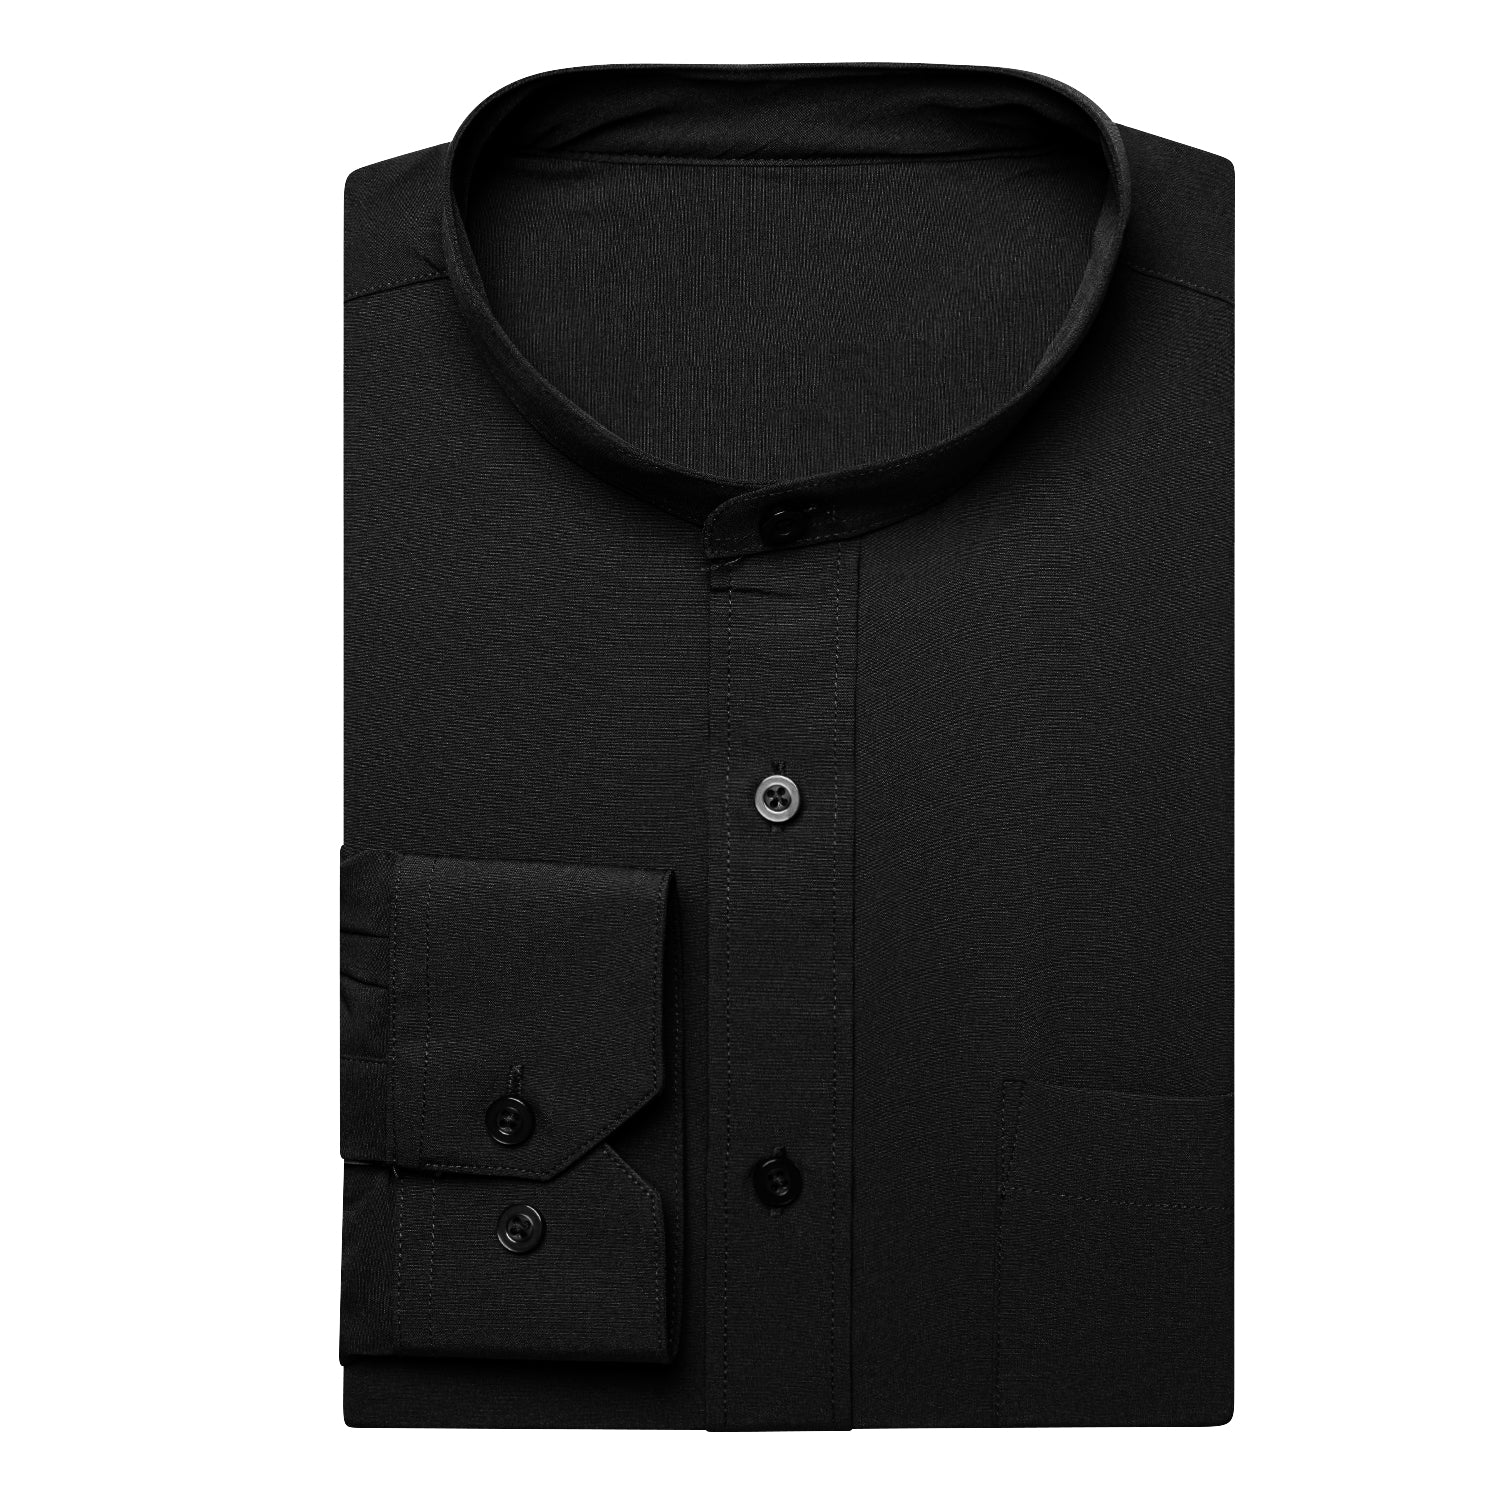 Black Solid Men's Long Sleeve Dress Shirt